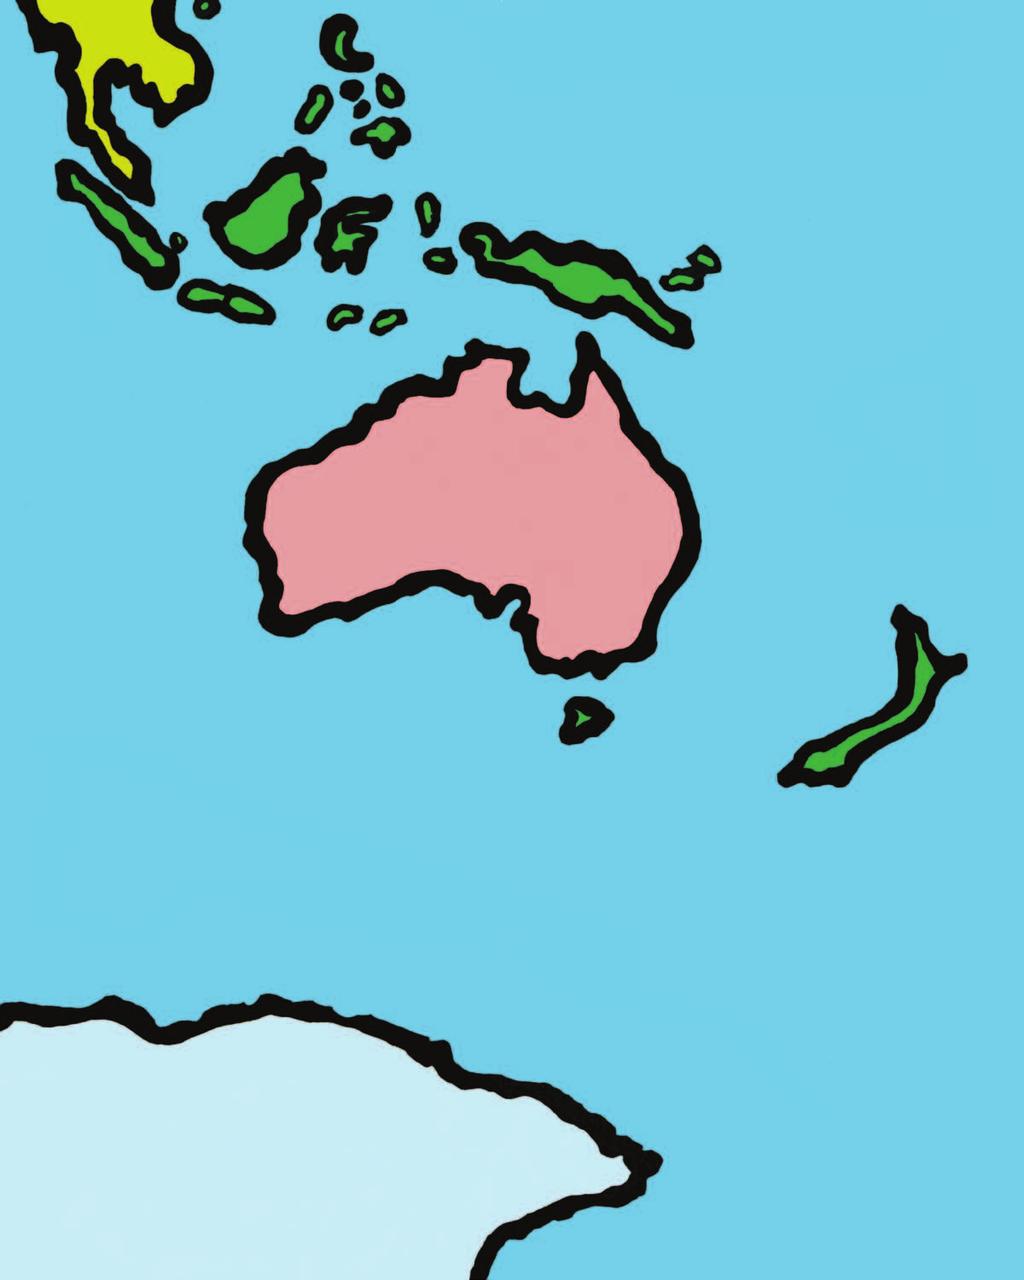 AUSTRALIA SOUTH PACIFIC OCEAN World Map GGFM (July 24) 8 2011 LifeWay